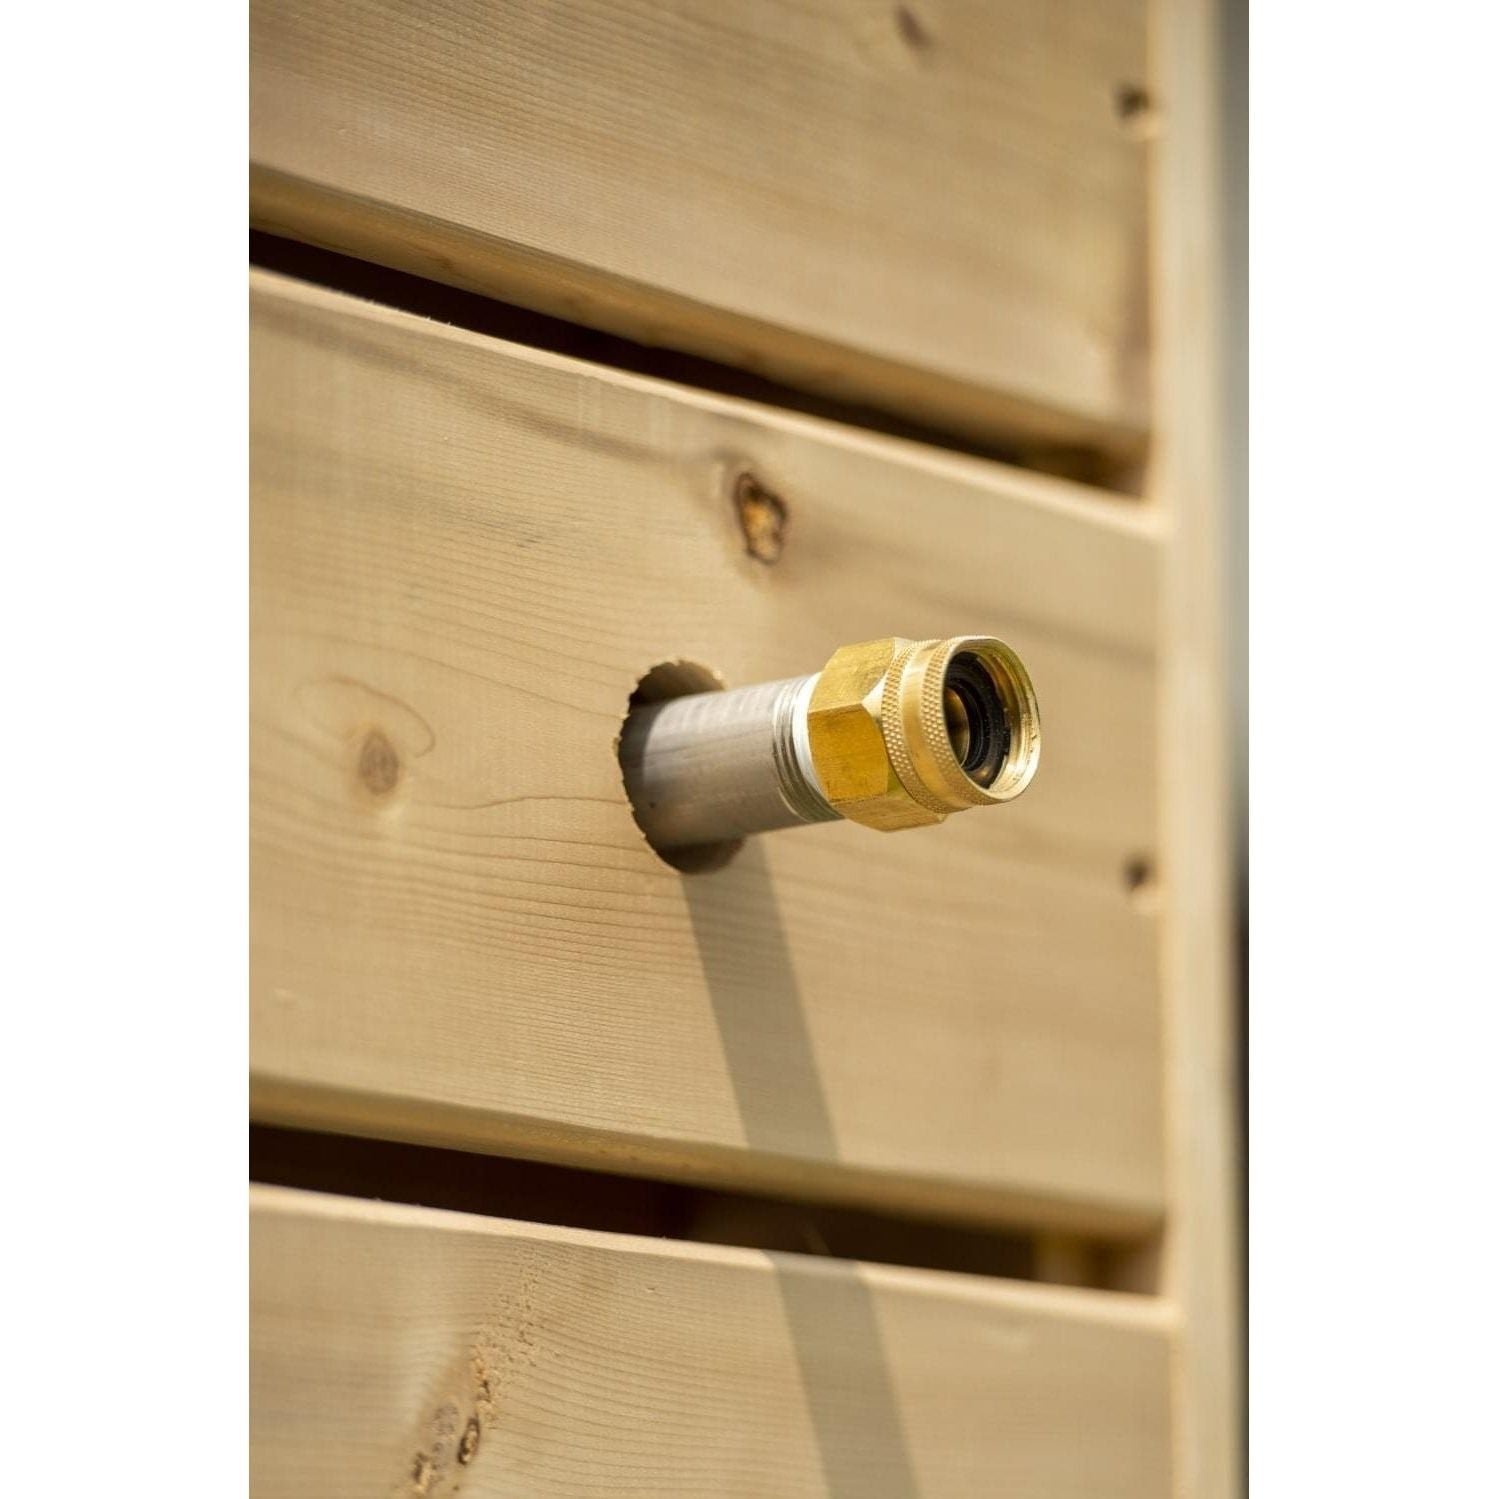 Canadian Timber Sierra Outdoor Shower - Select Saunas